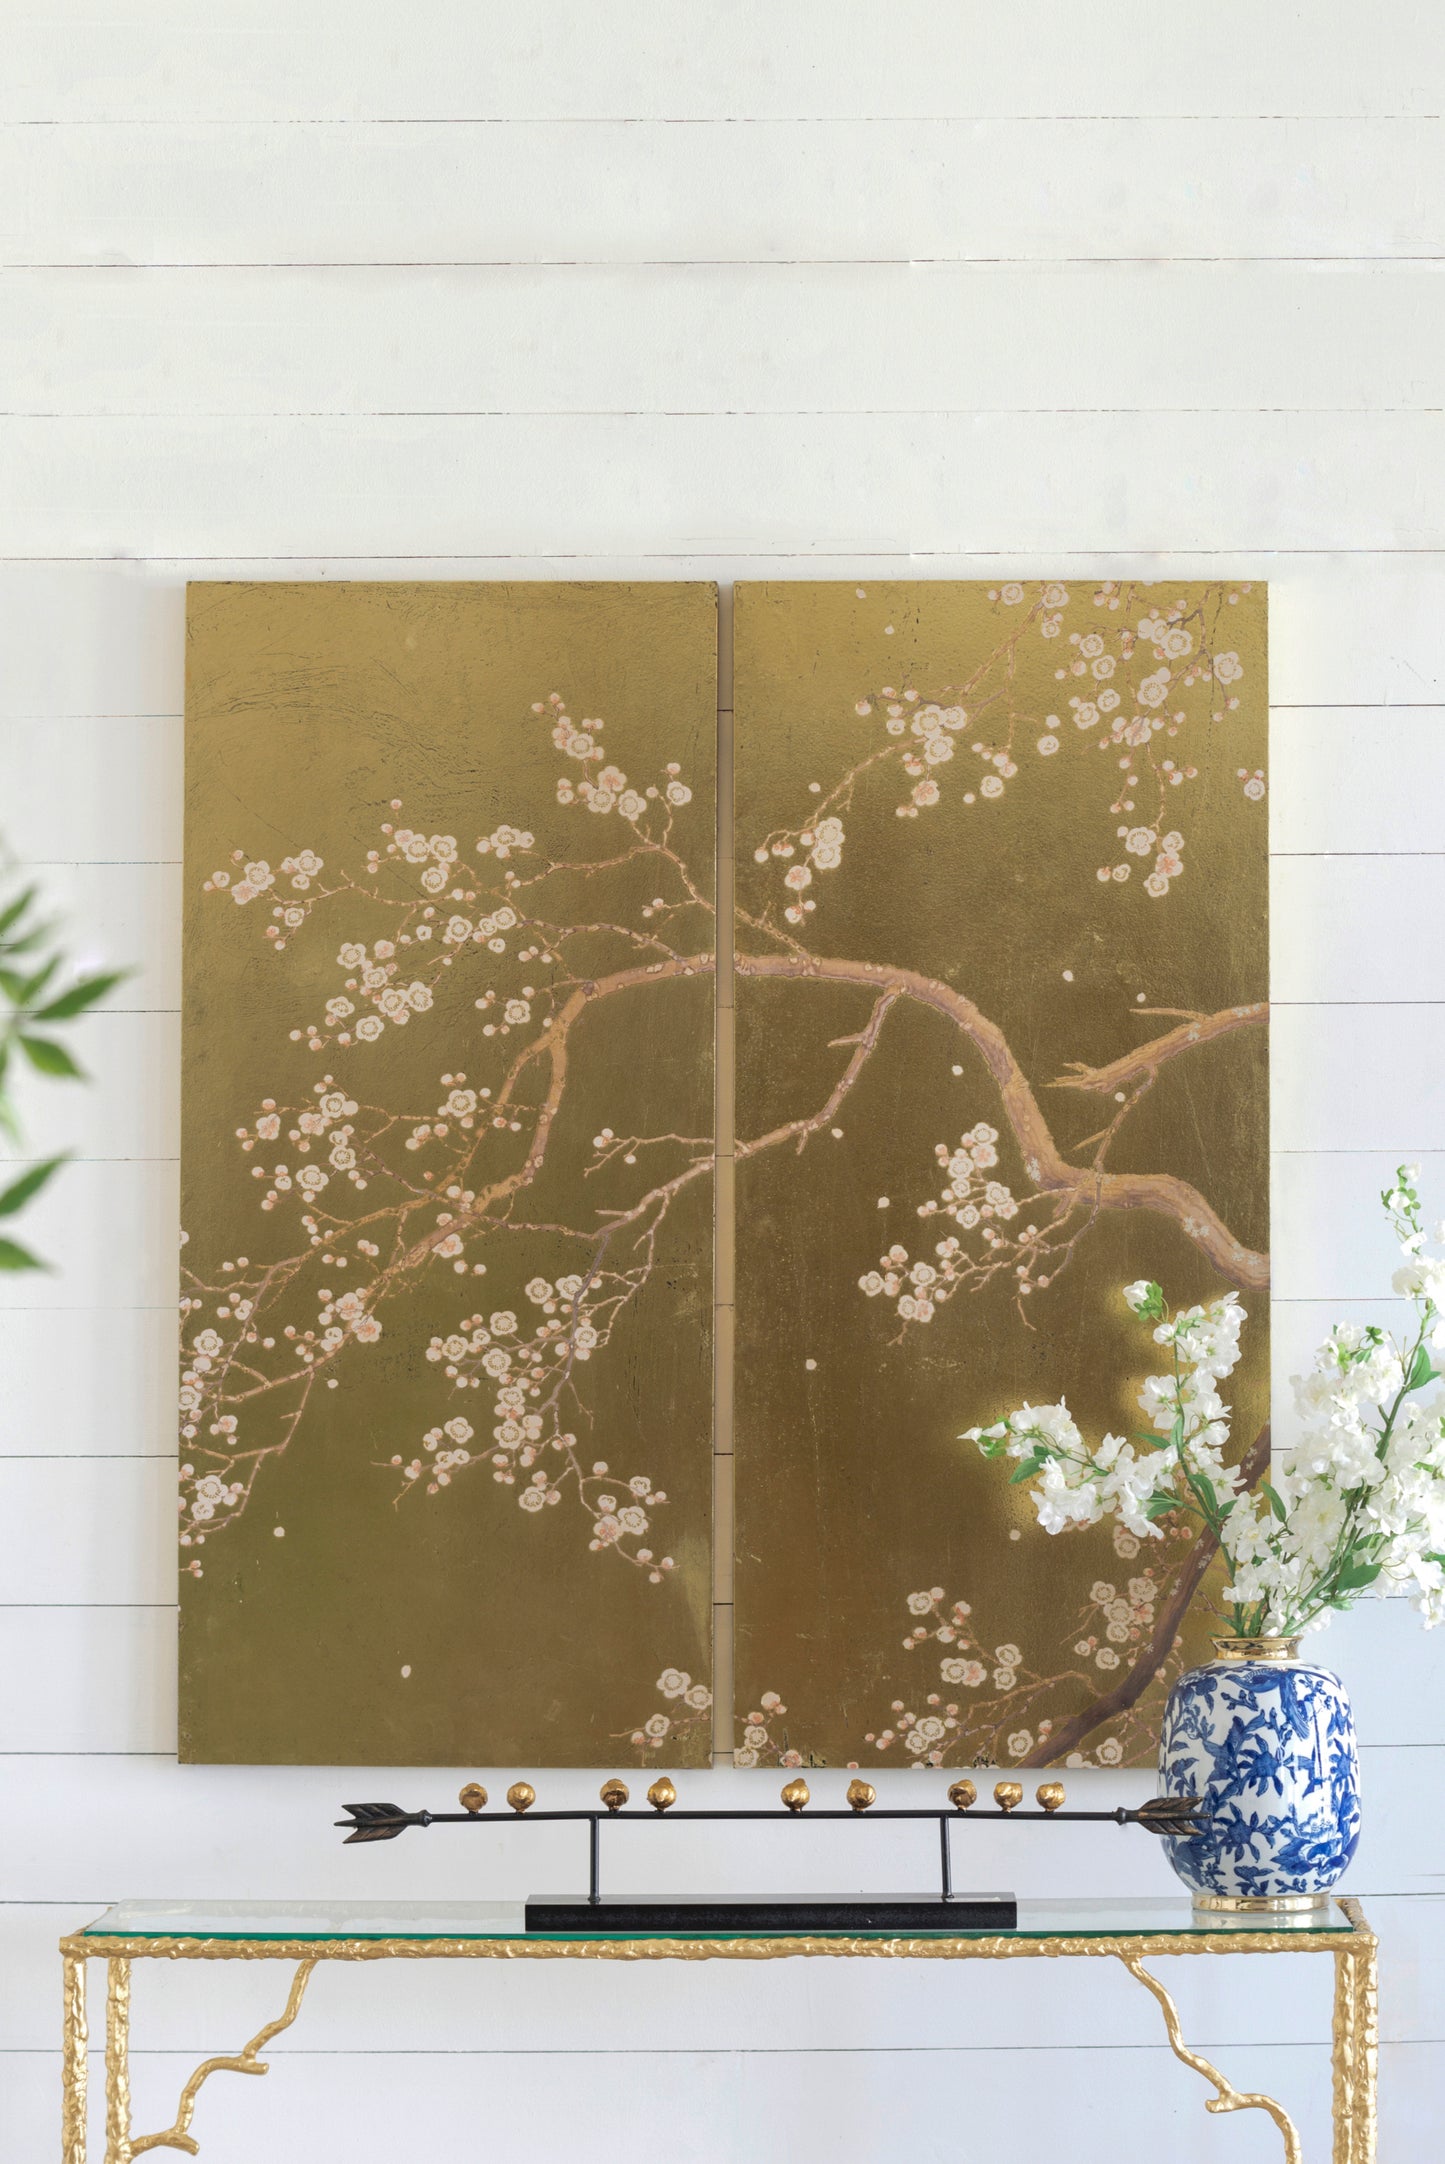 21.5" x 47" Set of 2 Cherry Blossom Wall Art Panels